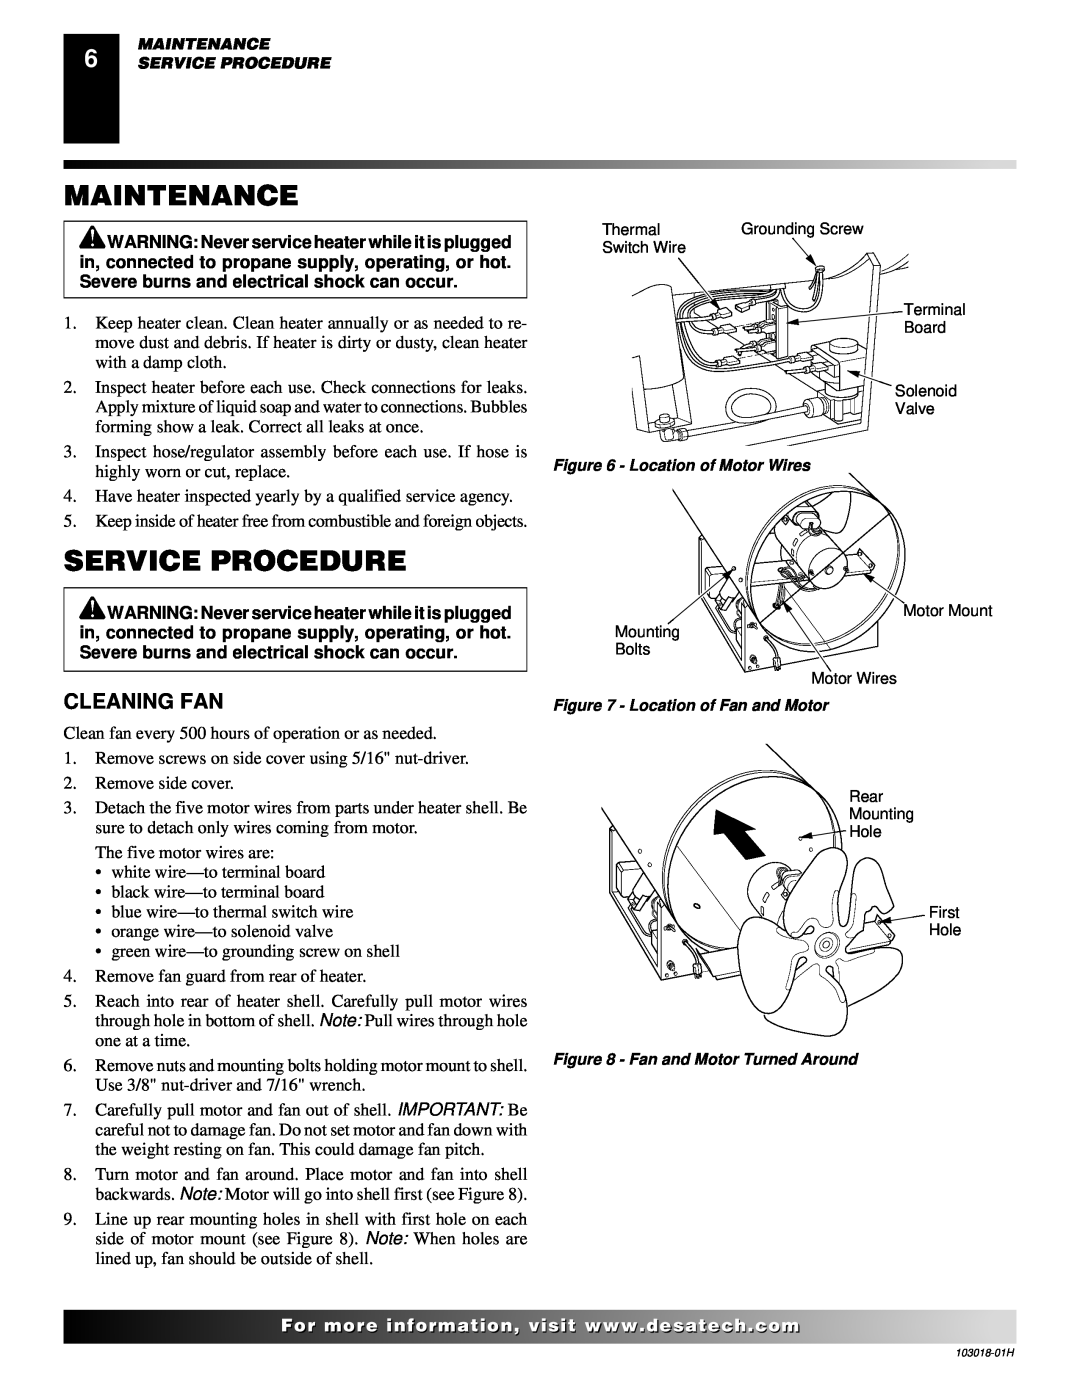 Desa BLP375AT owner manual Maintenance, Service Procedure, Cleaning Fan 